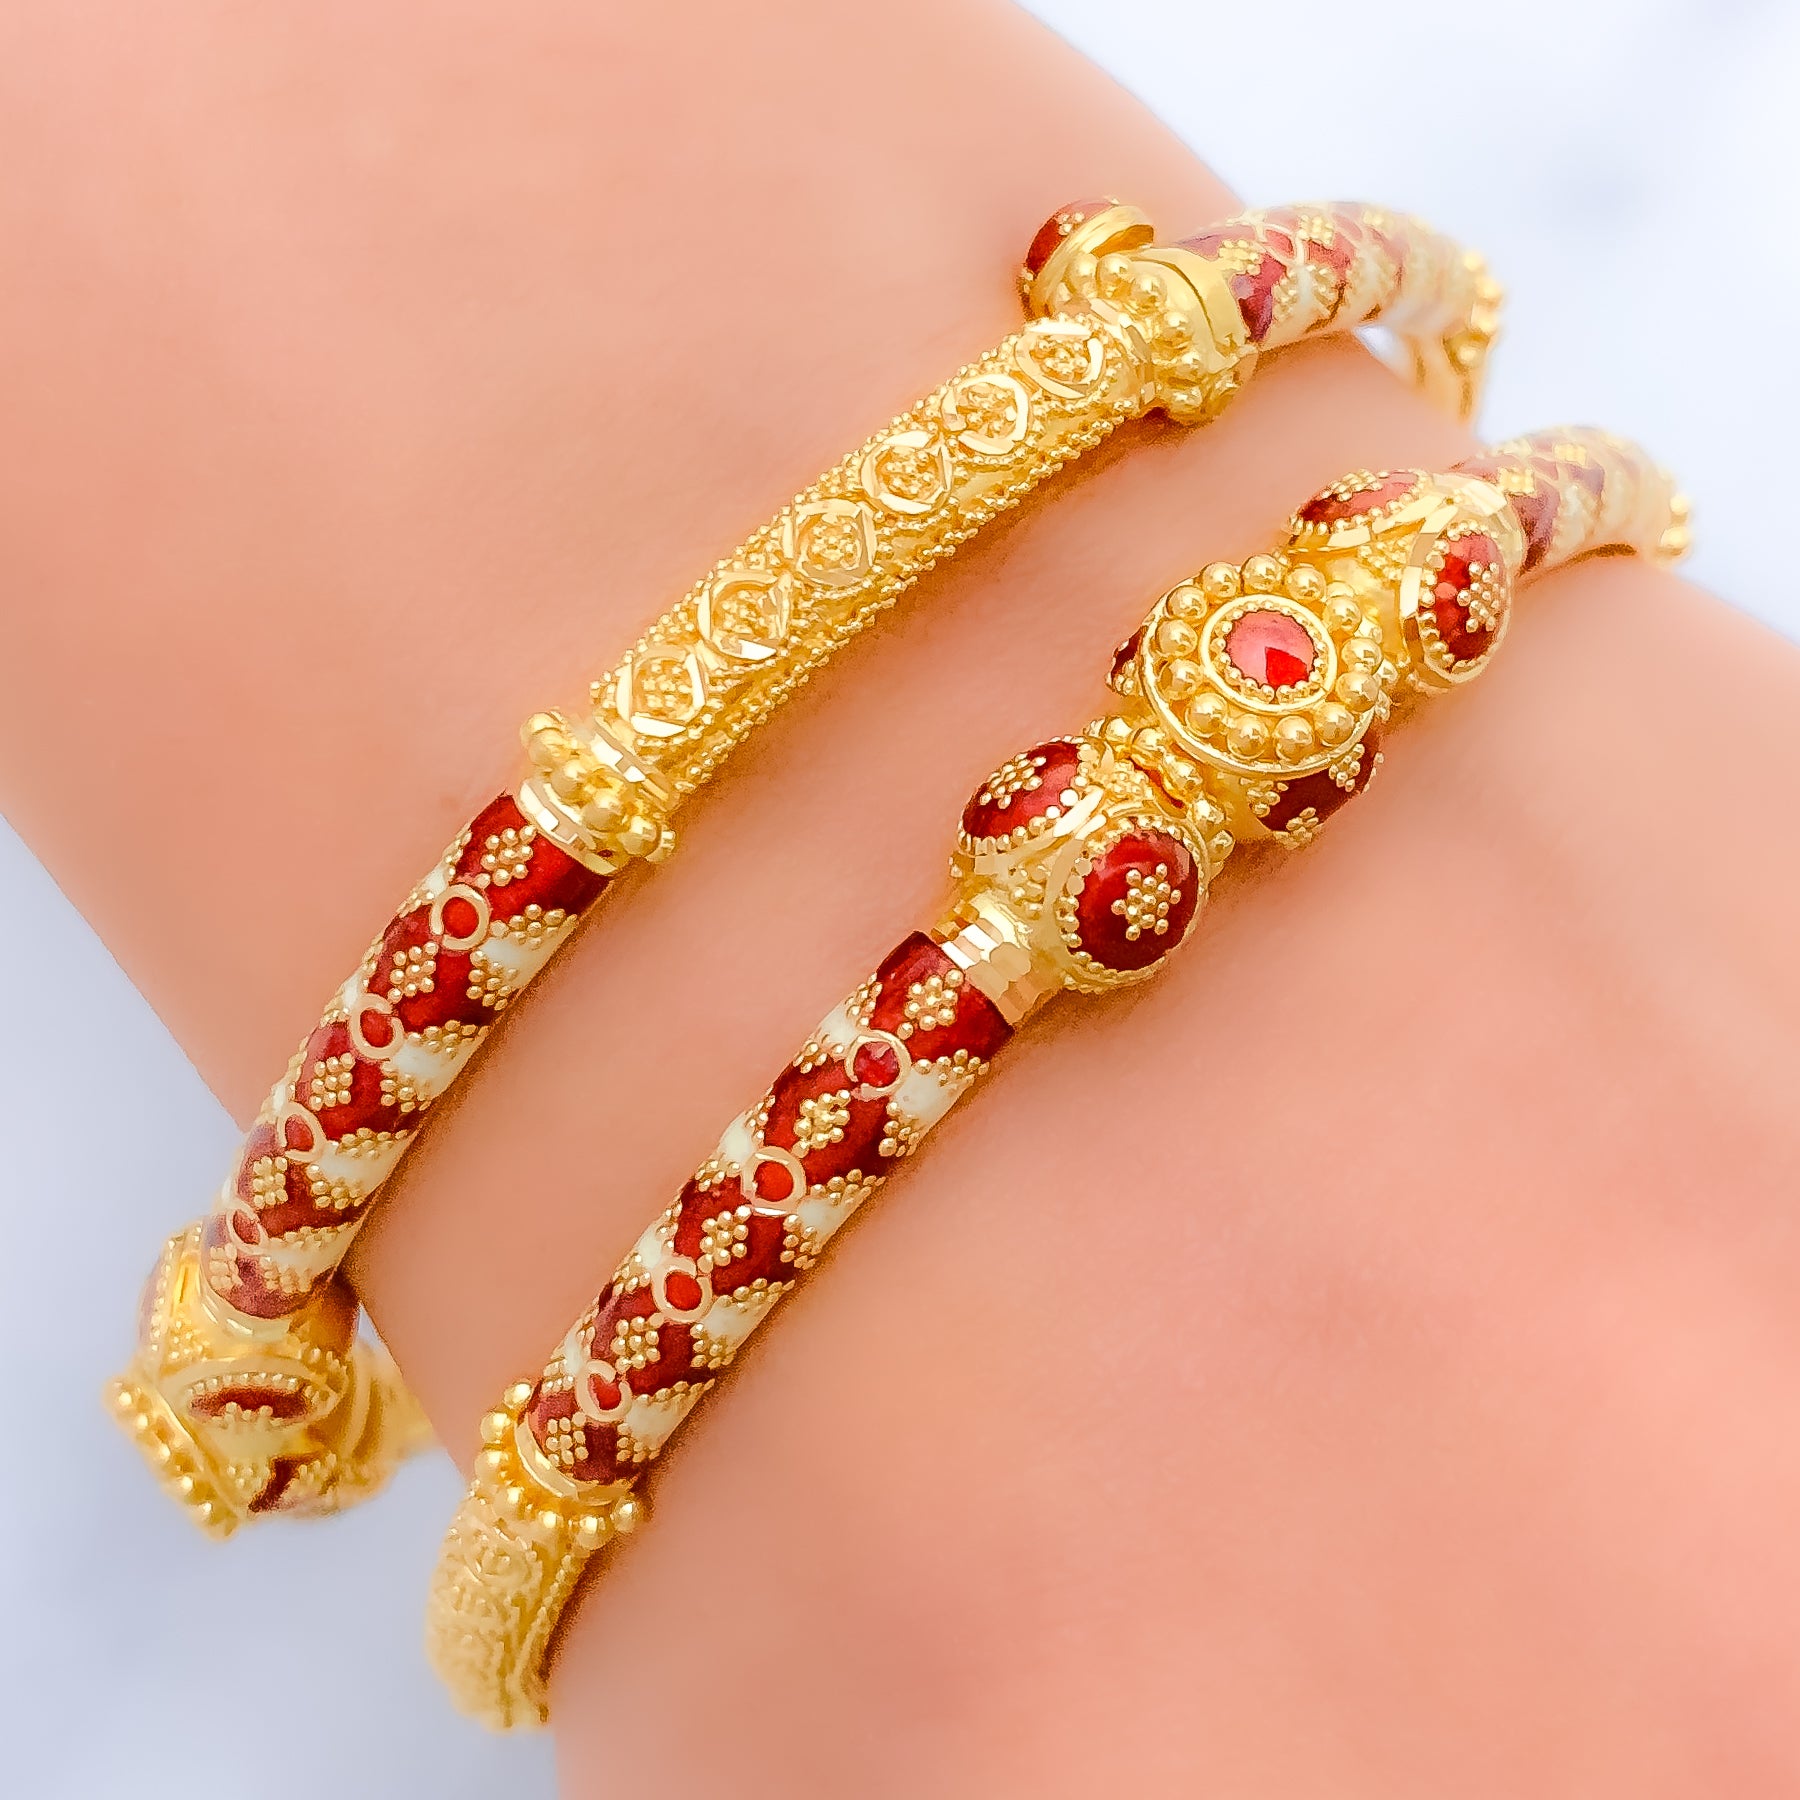 22K Indian Meenakari Bracelet - AjBr60713 - 22k Gold Indian design Bracelet  for ladies. Bracelet is beautifully handcrafted with beaded Gold bal